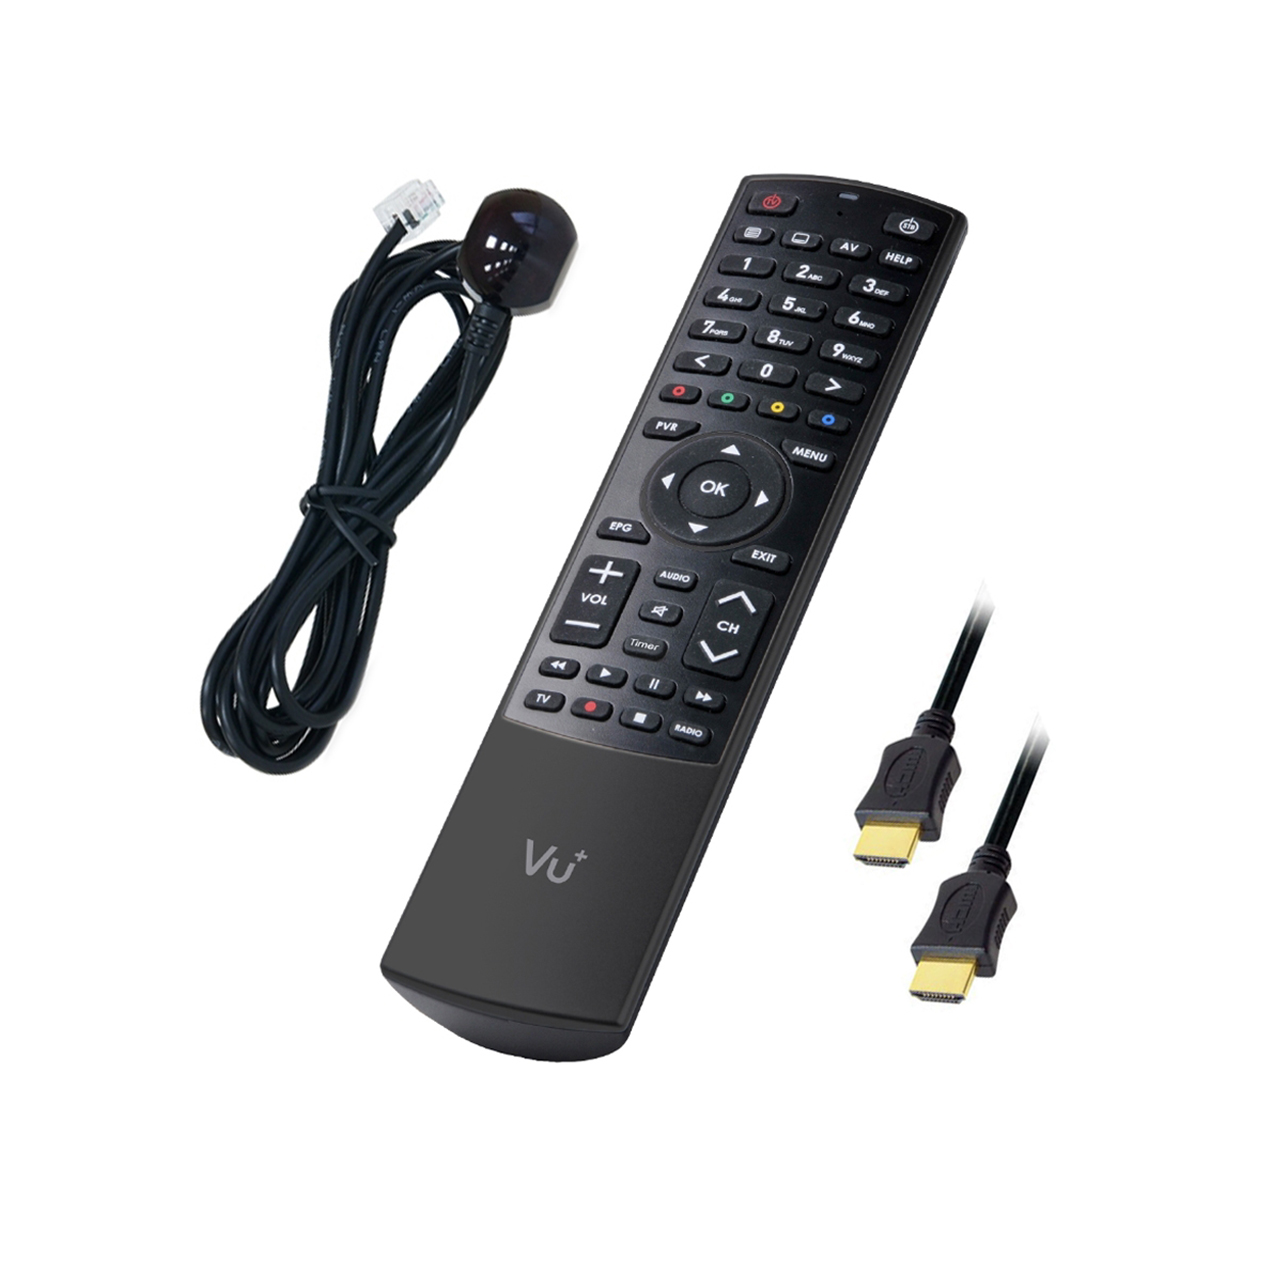 UHD 1x Zero H265 Linux 4K Tuner VU+ DVB-S2 Stick HD (Schwarz) Receiver Receiver Sat Wlan Sat